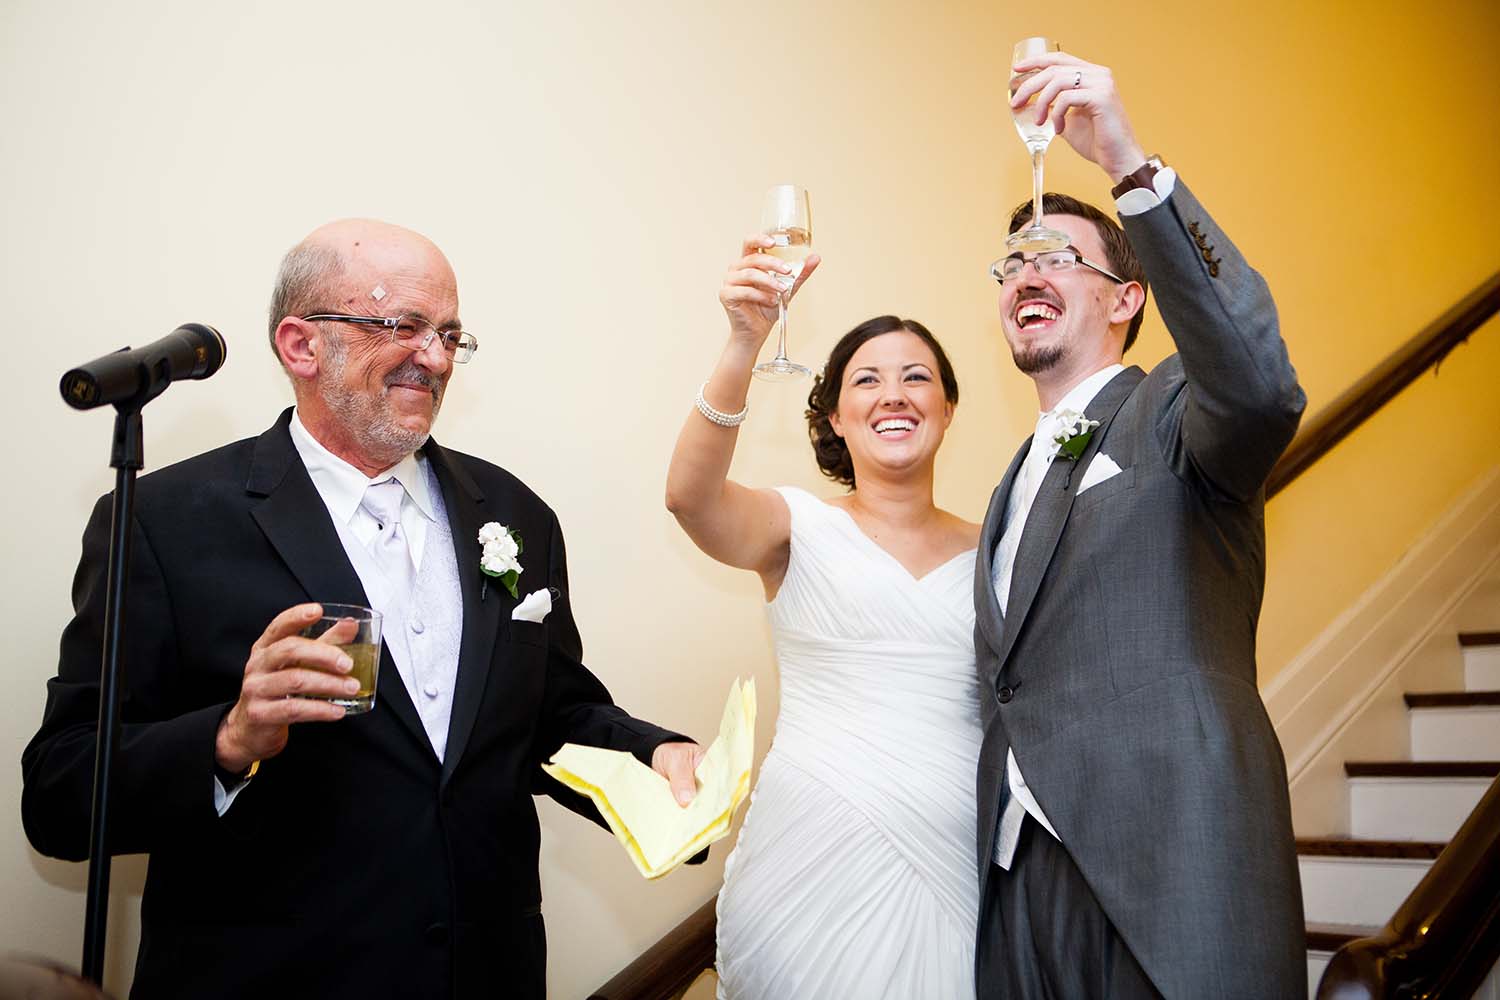 Father bride wedding reception toast candid